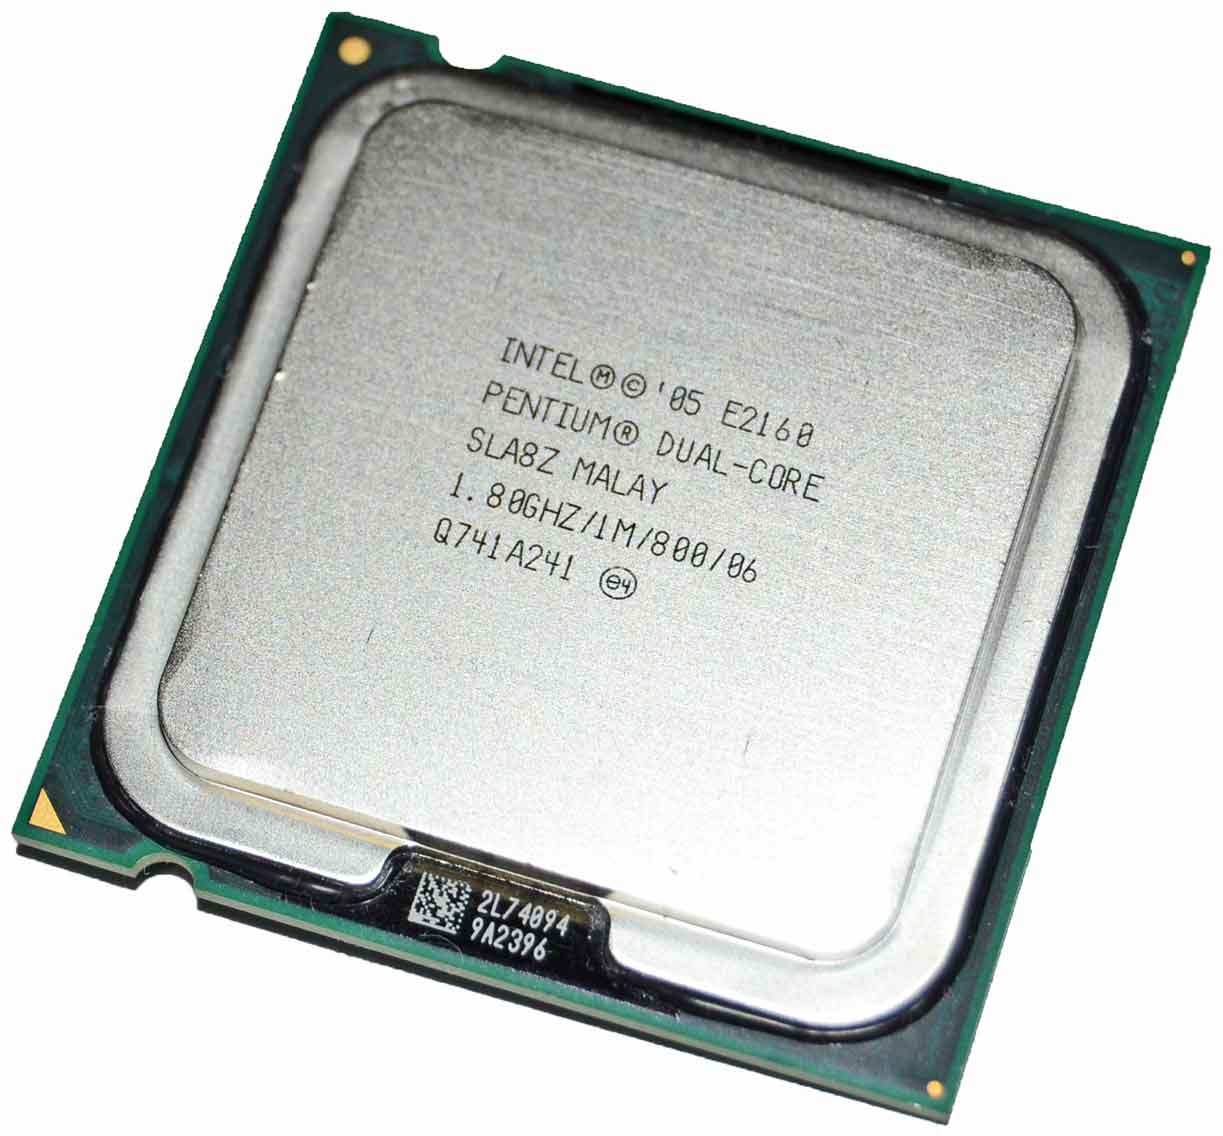 Intel Bxe2160 1 80ghz 800mhz 1mb Cache Lga775 Intel Pentium E2160 Dual Core Cpu Processor Cpu Medics